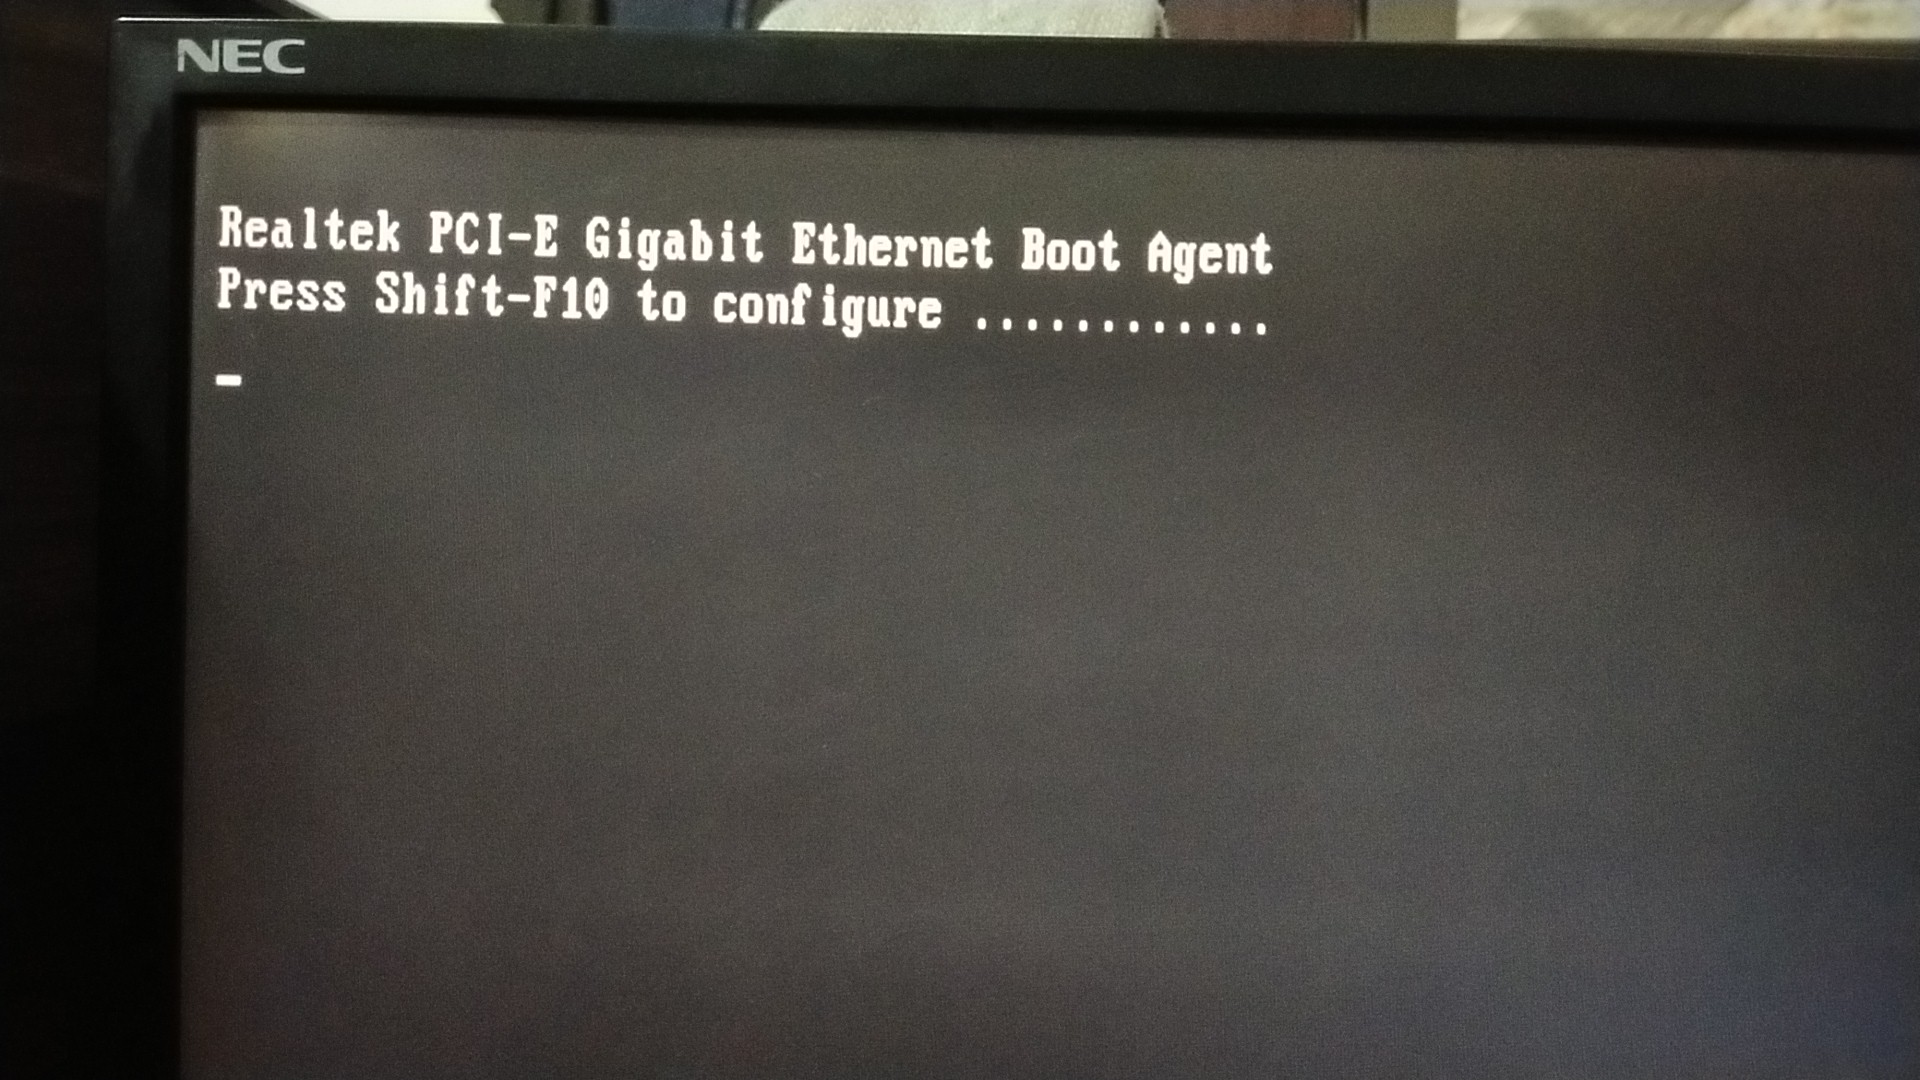 Realtek pci-e fast ethernet boot agent press shift-f10 to configure.......